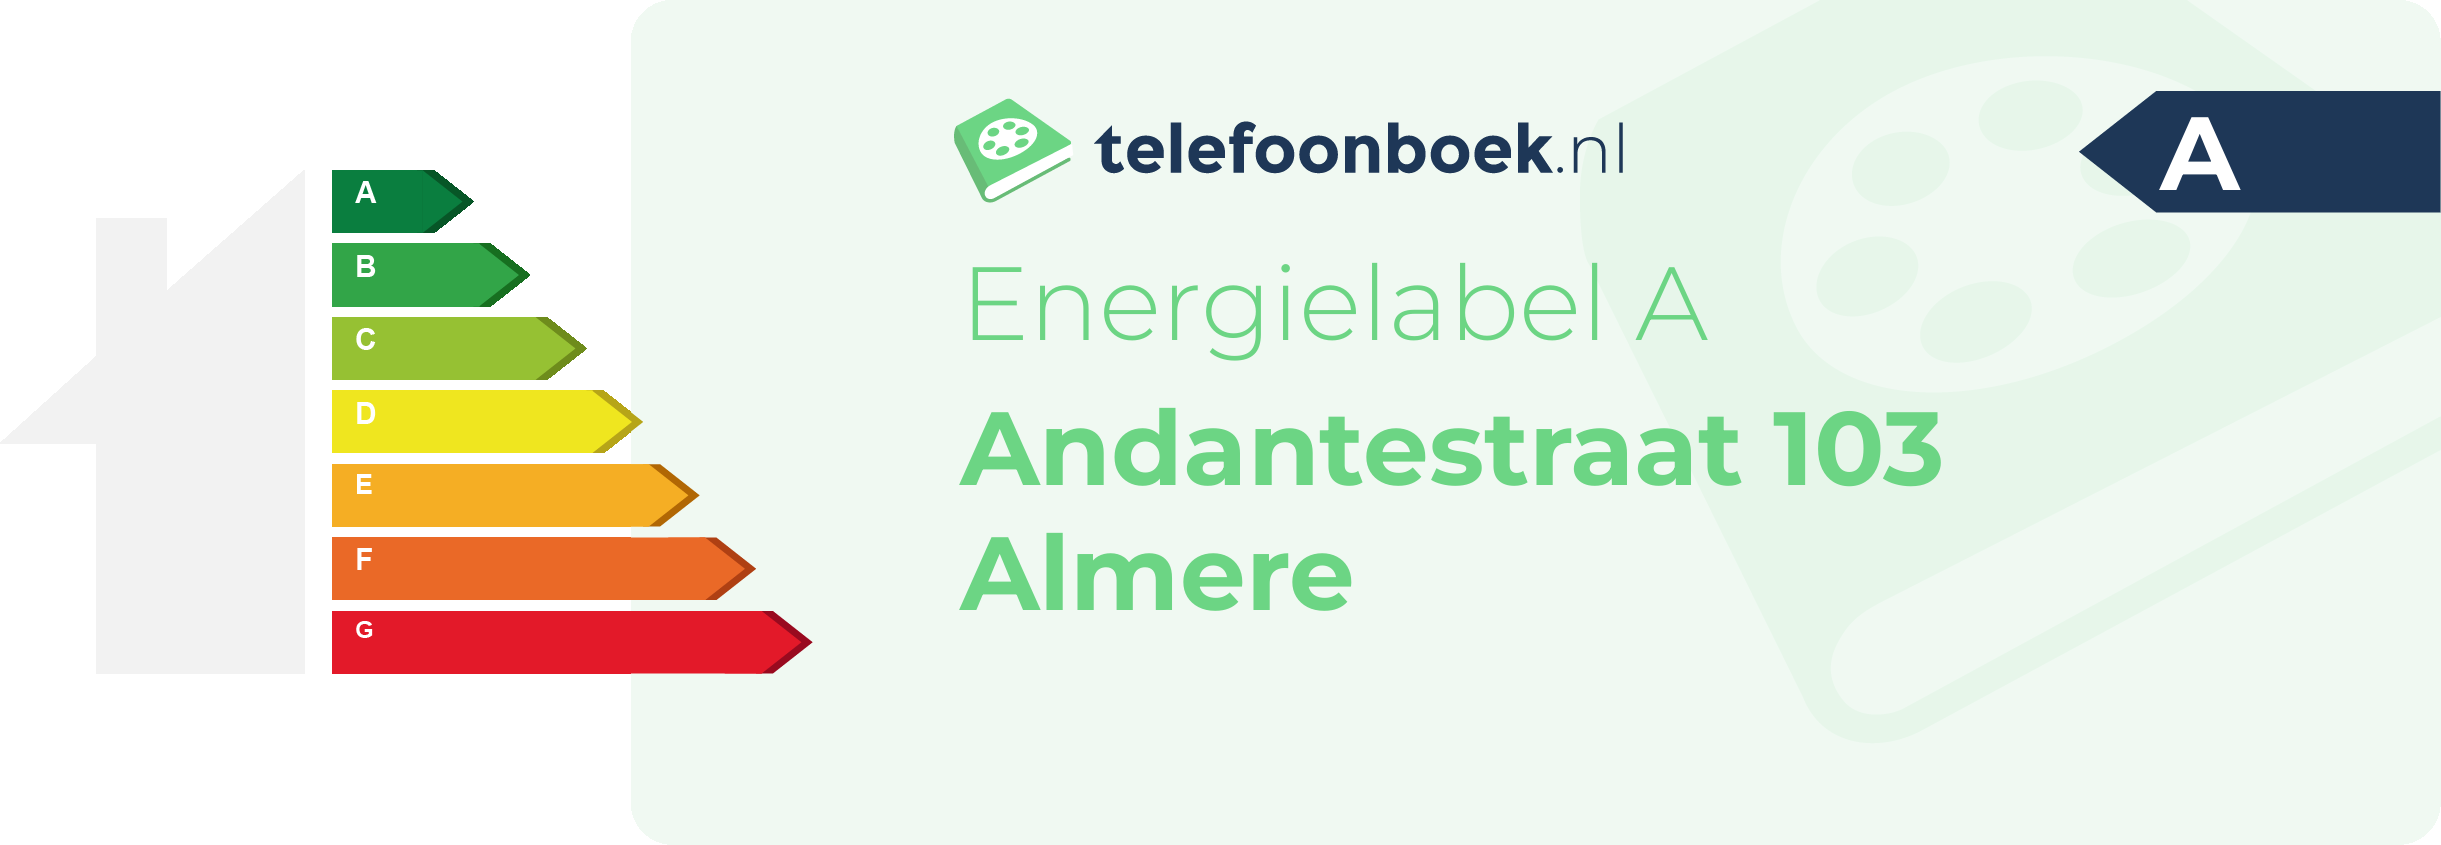 Energielabel Andantestraat 103 Almere